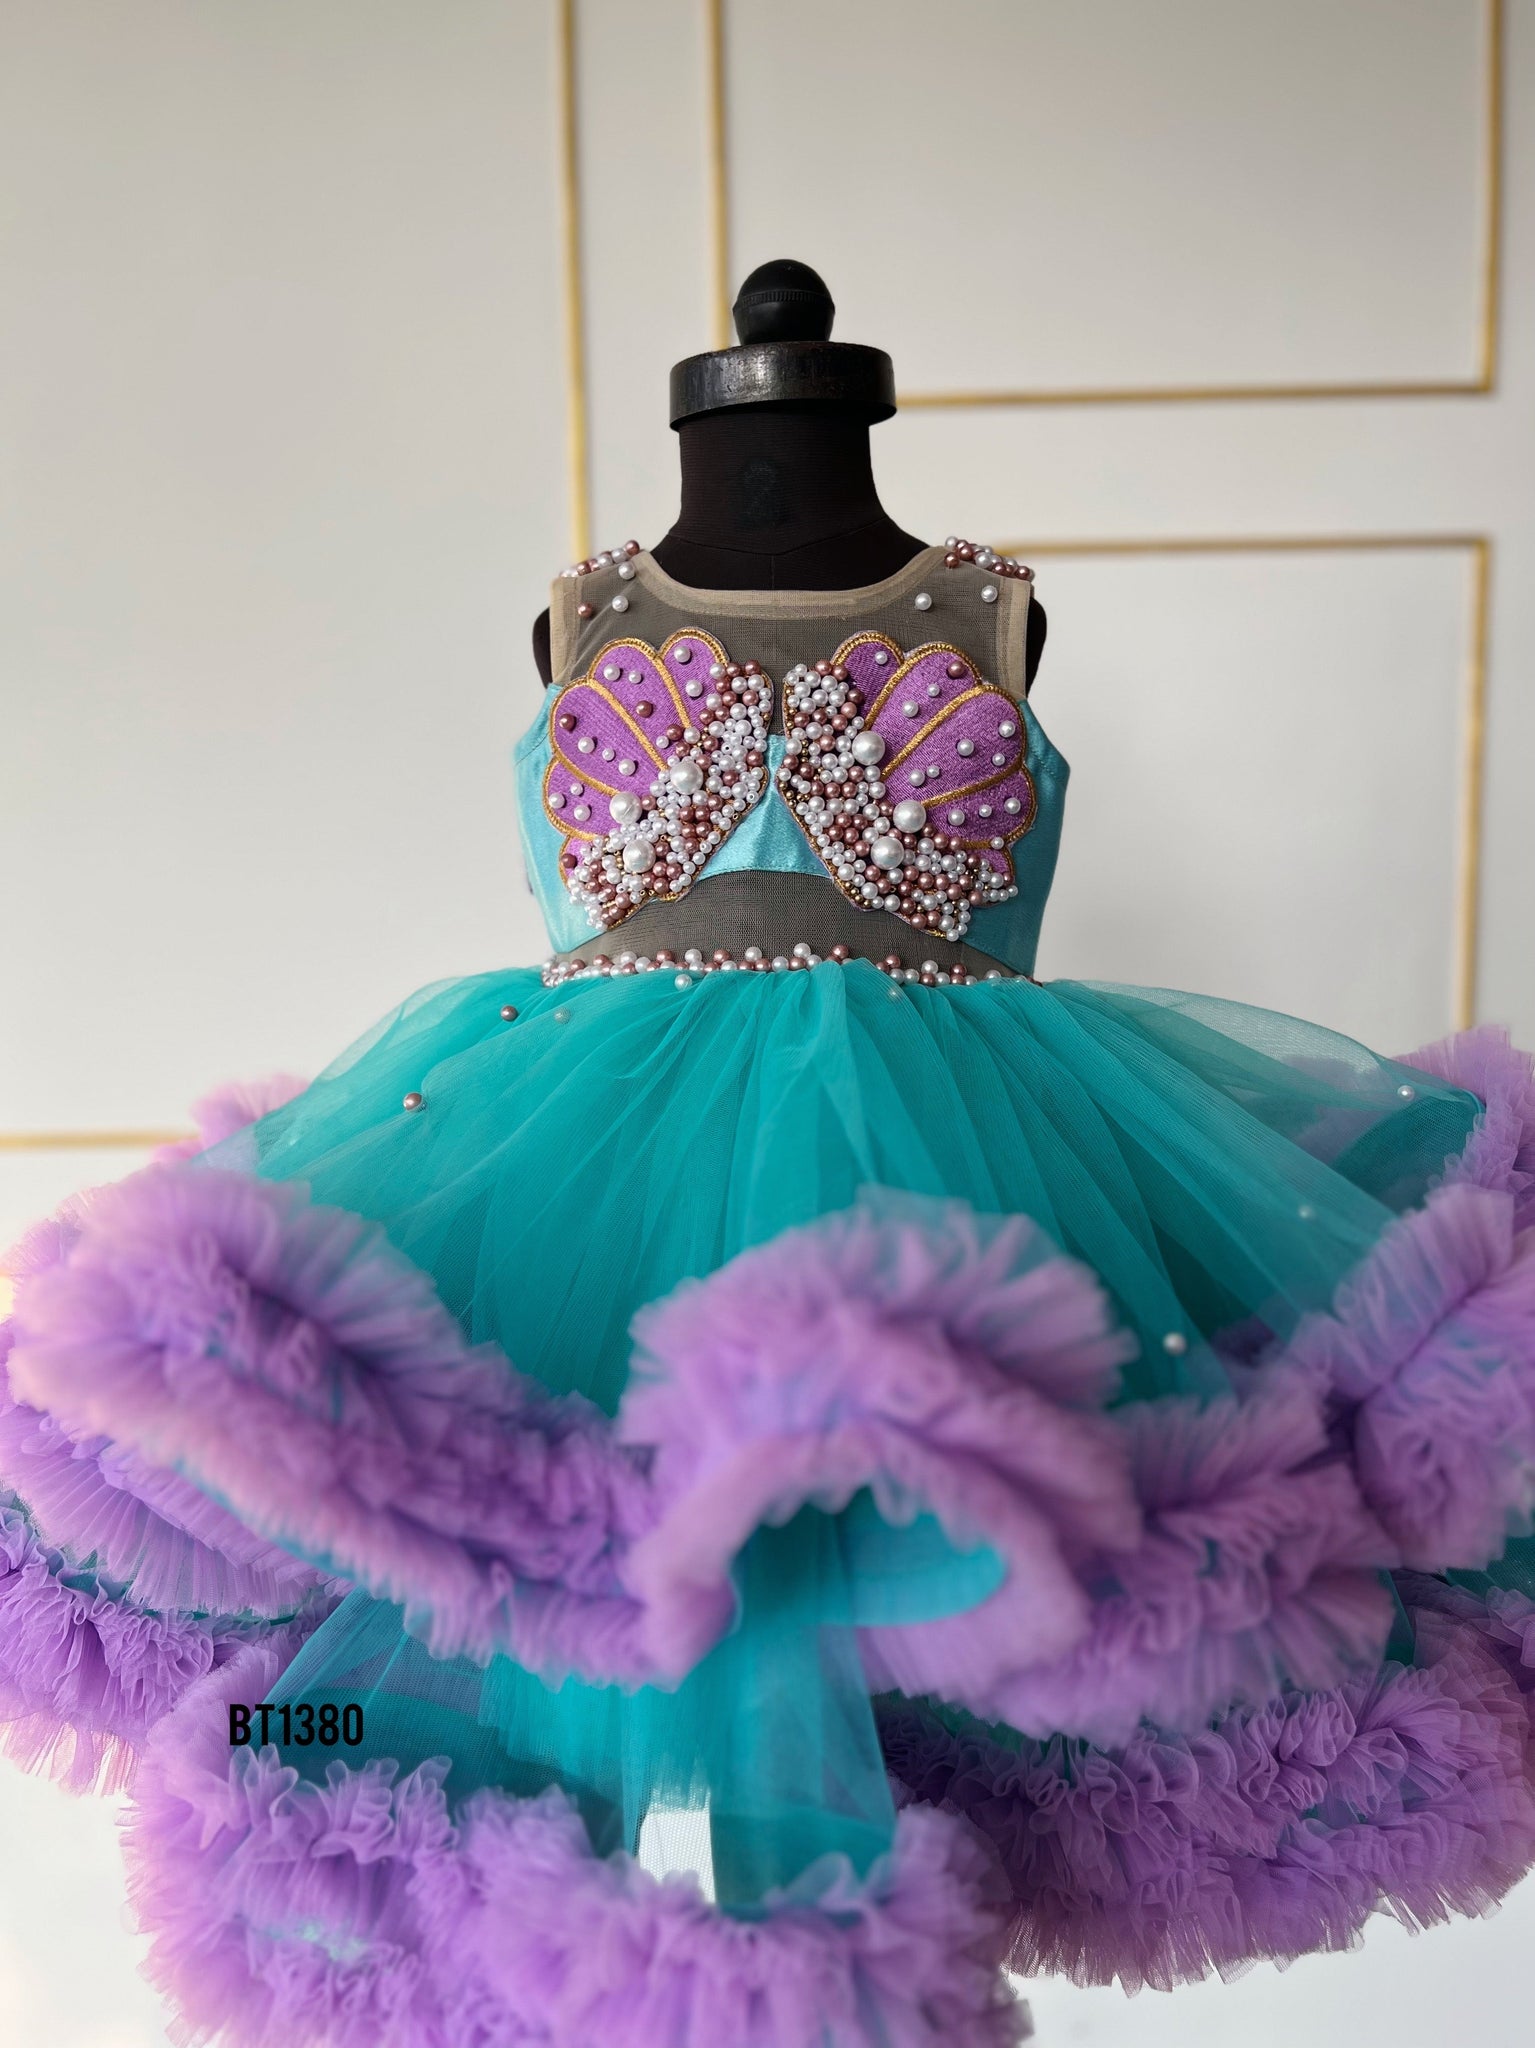 BT1380 Turquoise Butterfly Princess Dress - Spread the Wings of Joy! –  BabyTeen Fashion